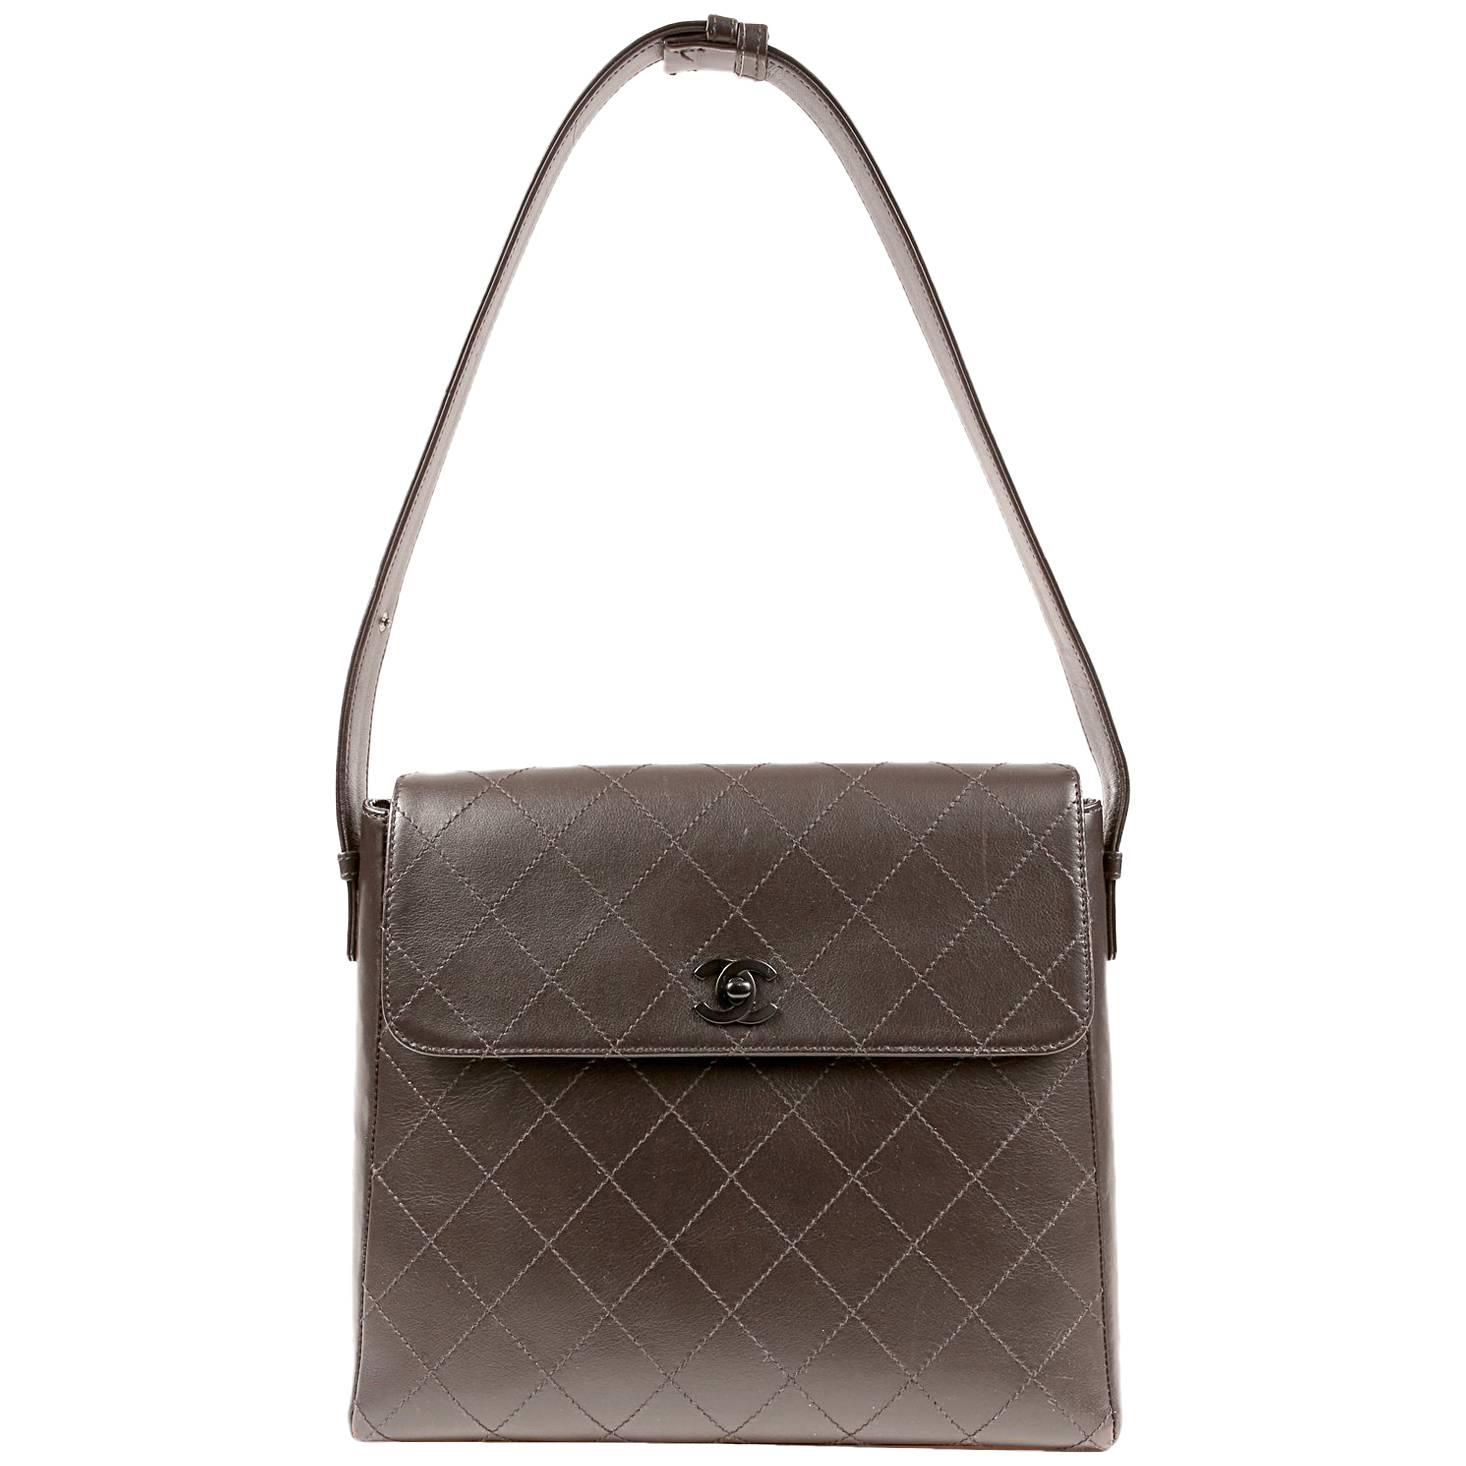 Chanel Brown Leather Flat Stitched Shoulder Bag For Sale